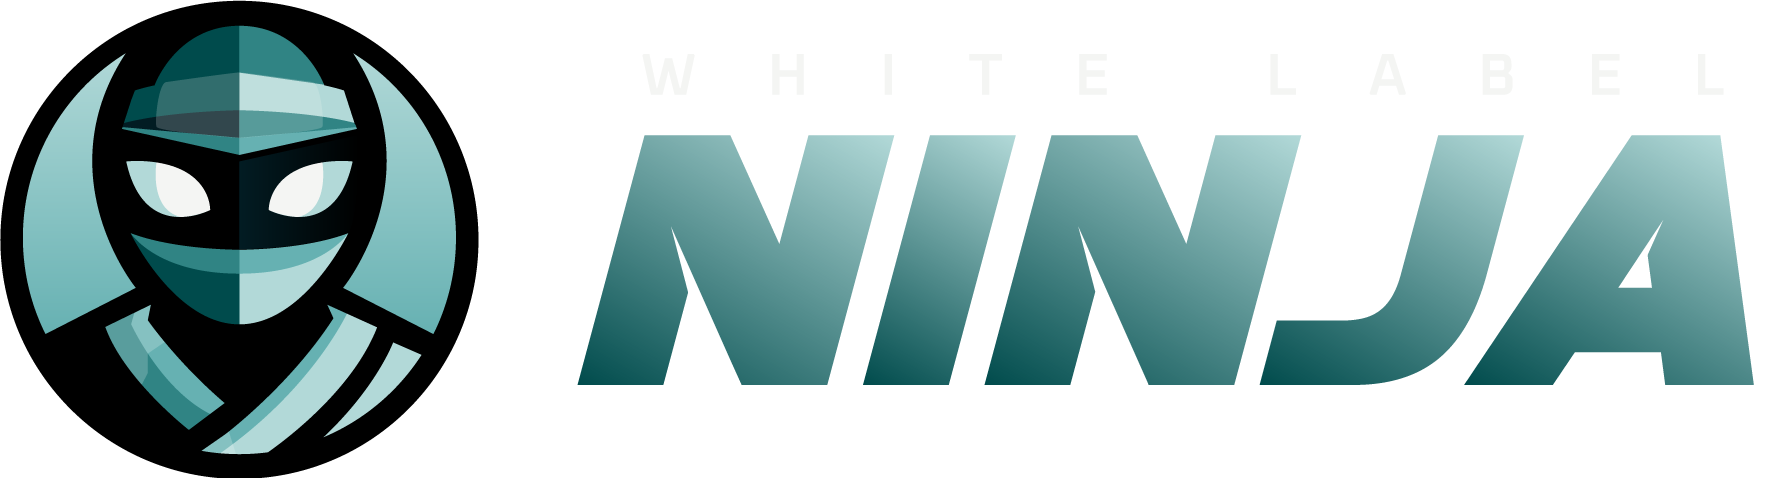 White Label Ninja Logo 2